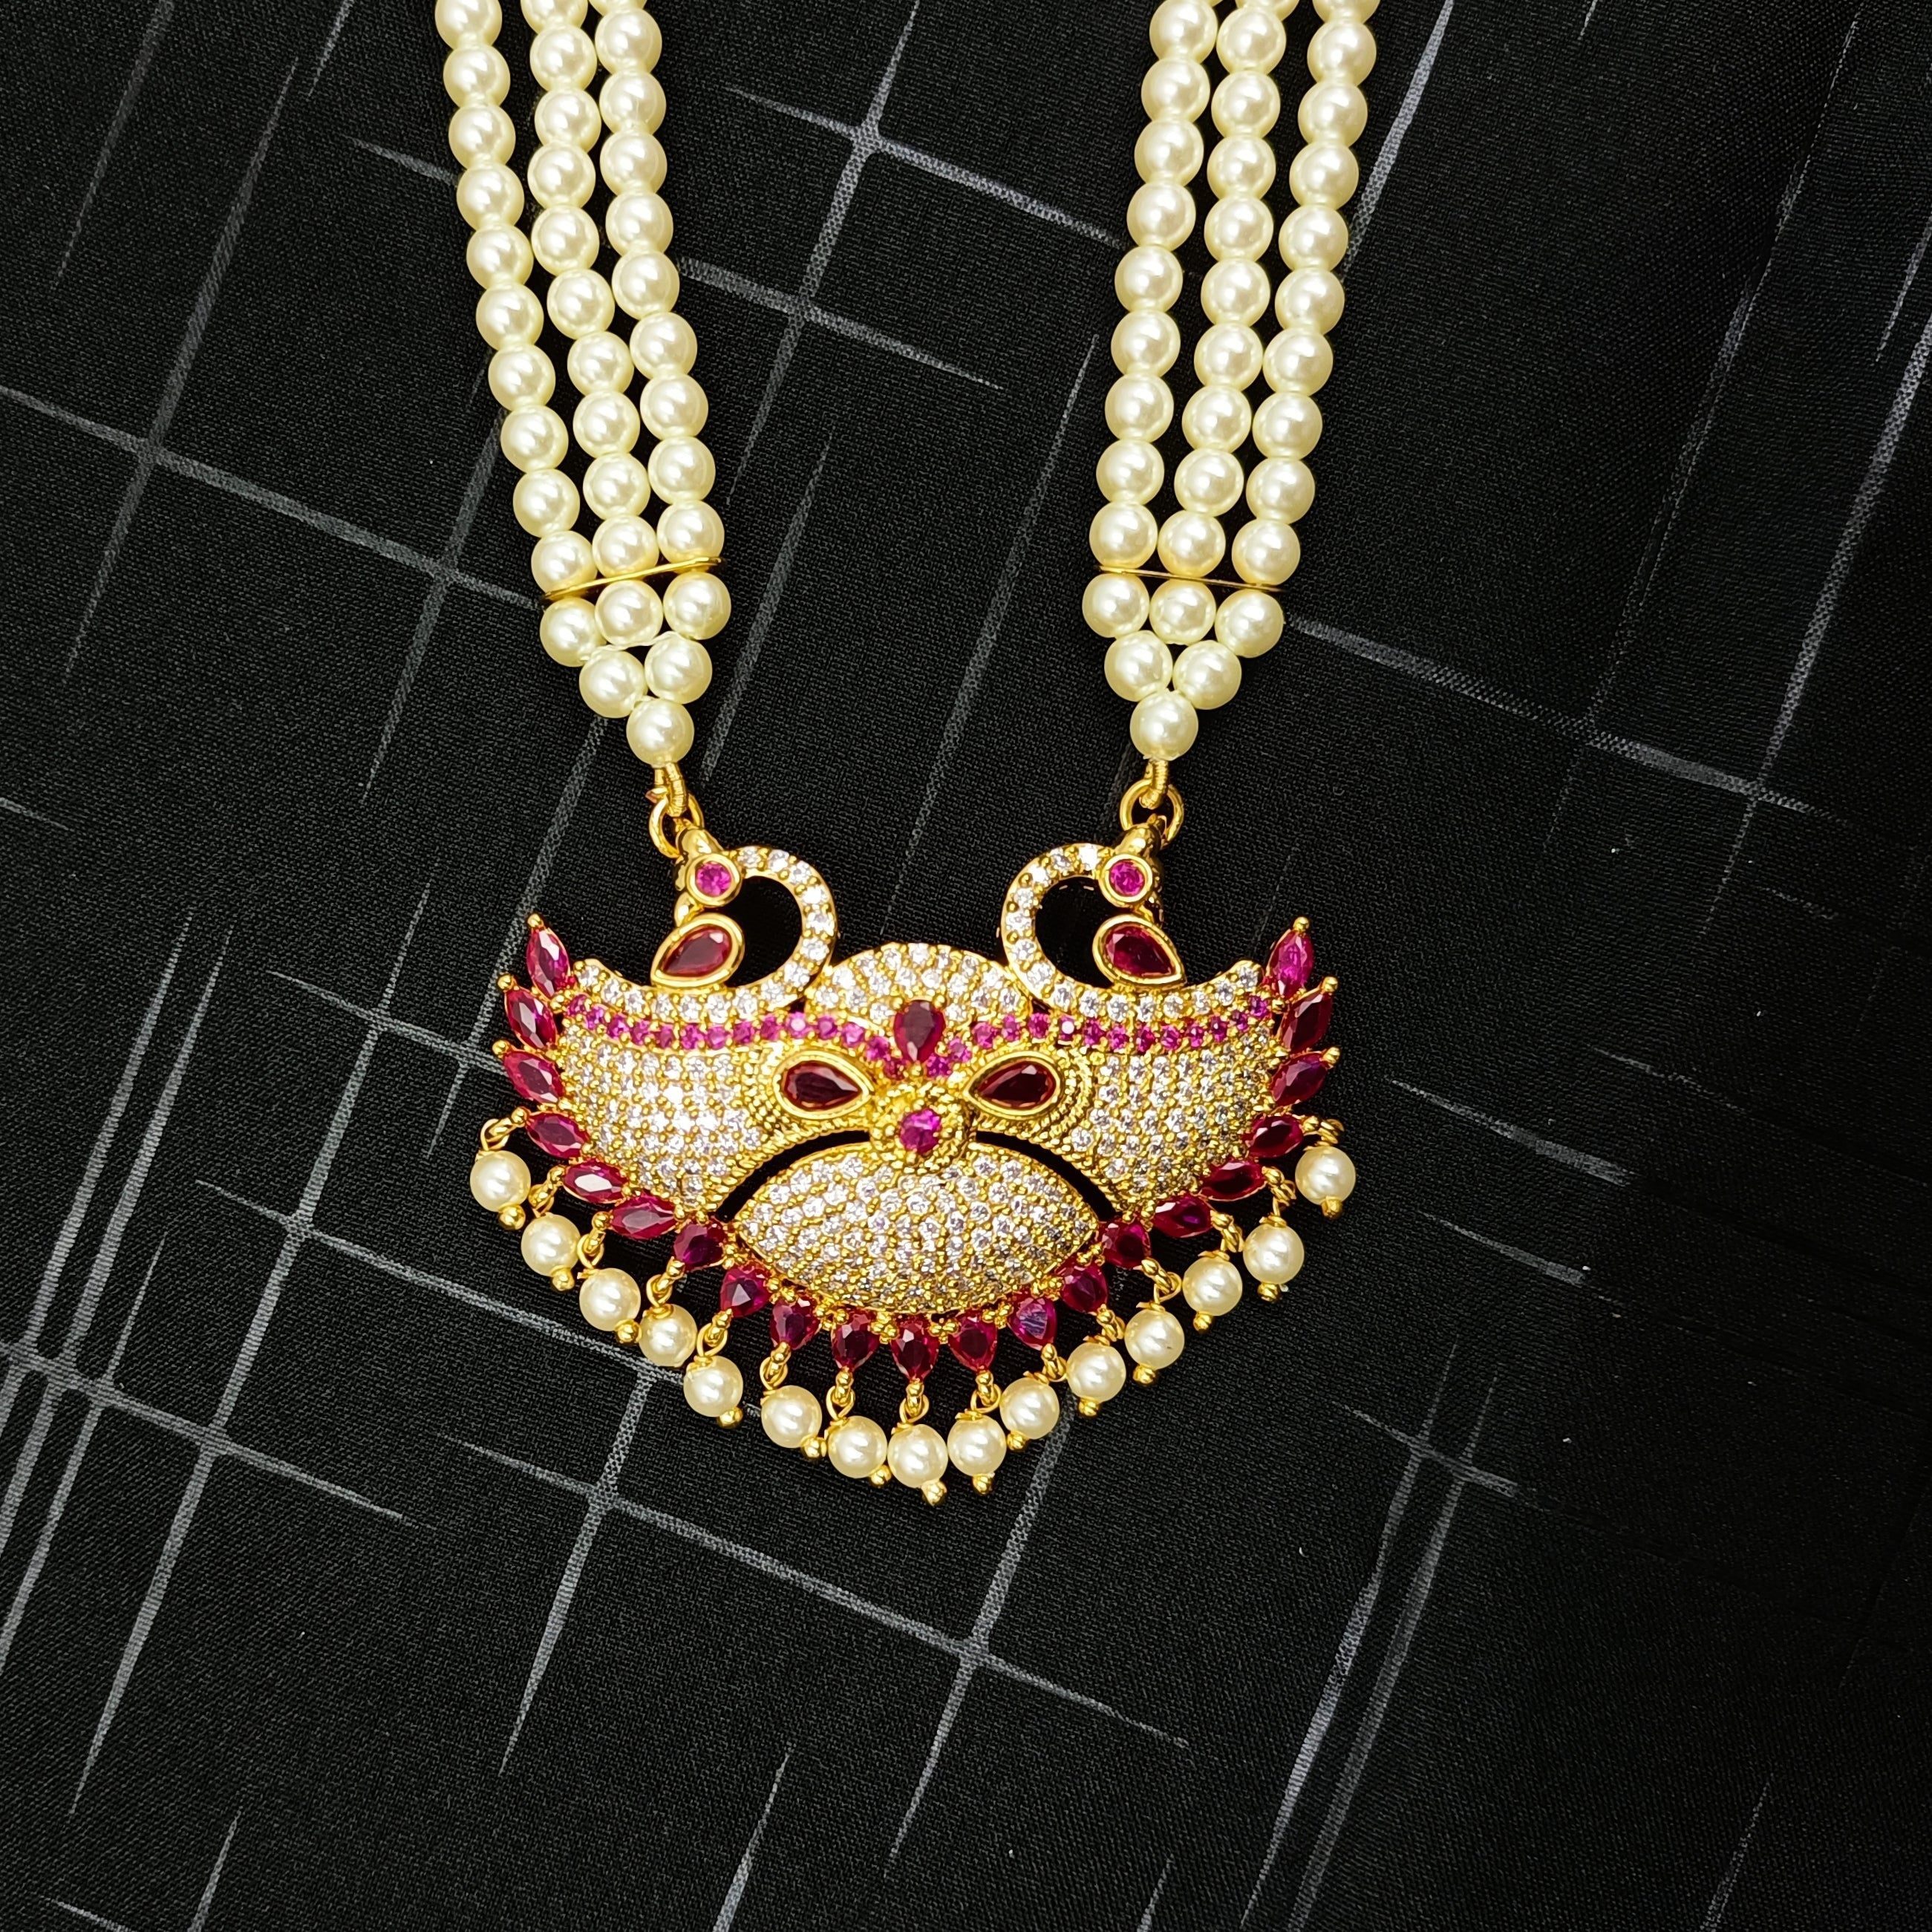 Buy Moti Jewellery at Best Price in India | Myntra